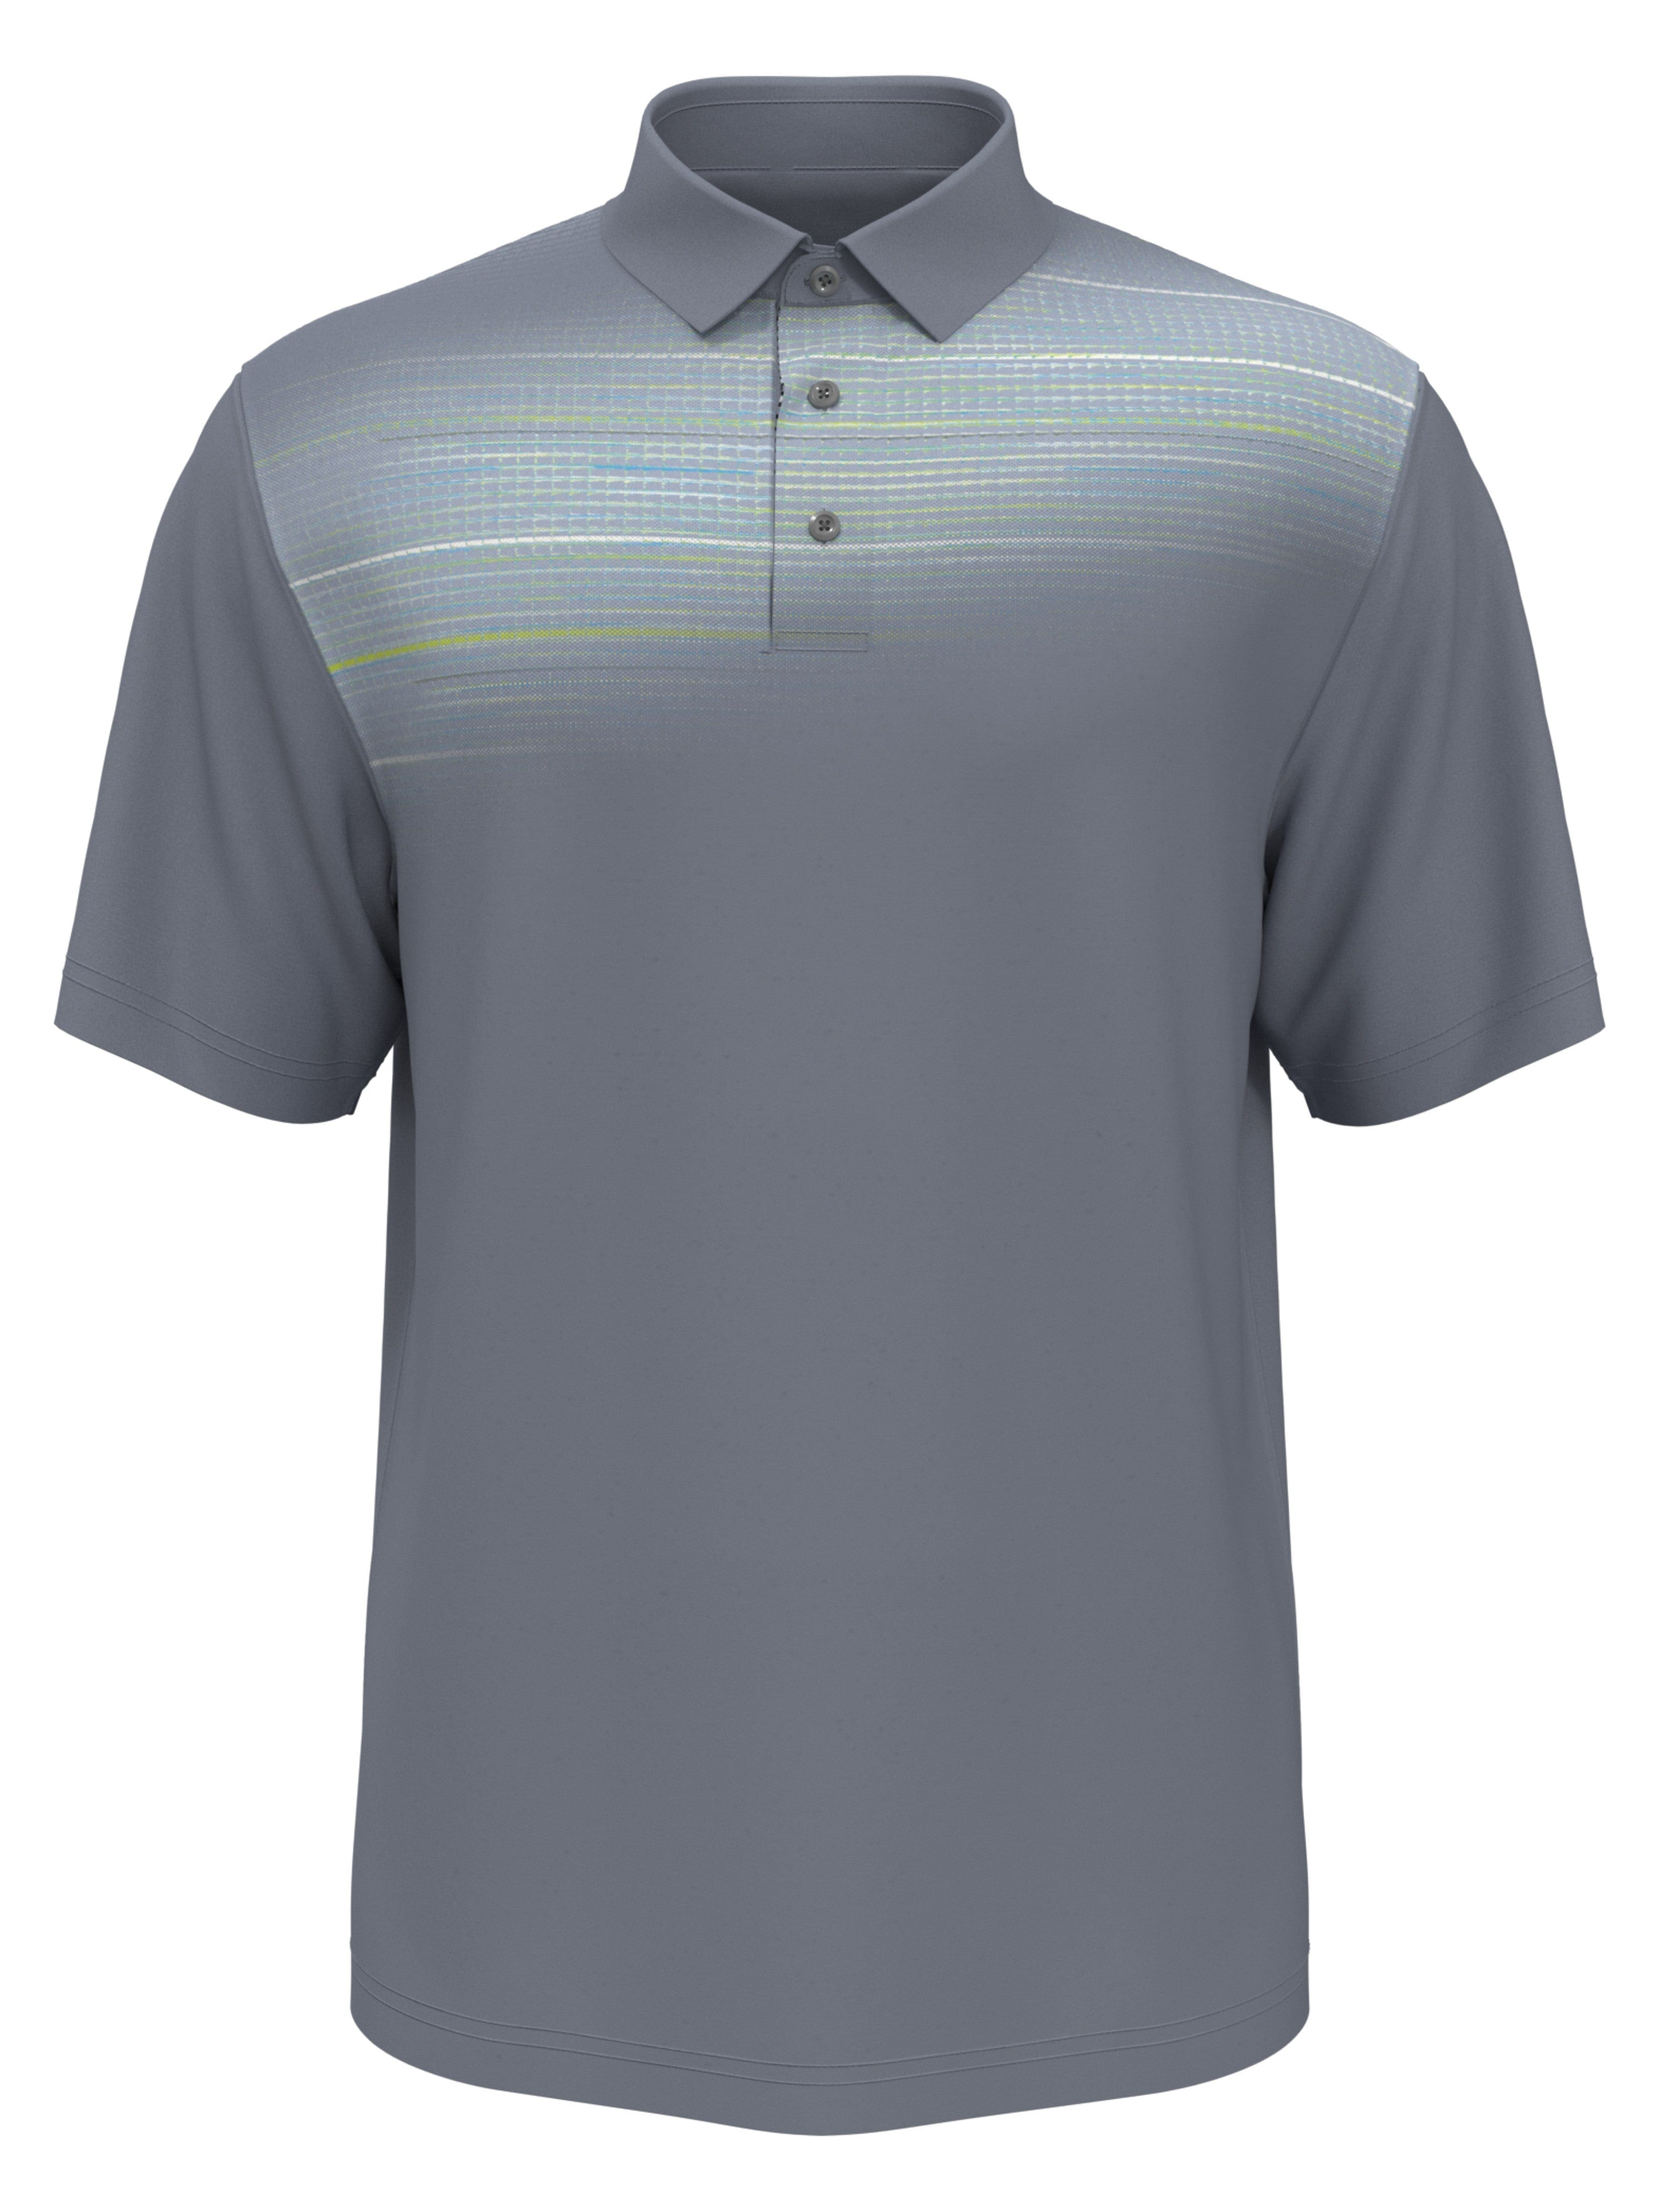 PGA TOUR Apparel Boys Amplified Space Dye Golf Polo Shirt, Size Large, Tradewinds Gray, 100% Polyester | Golf Apparel Shop